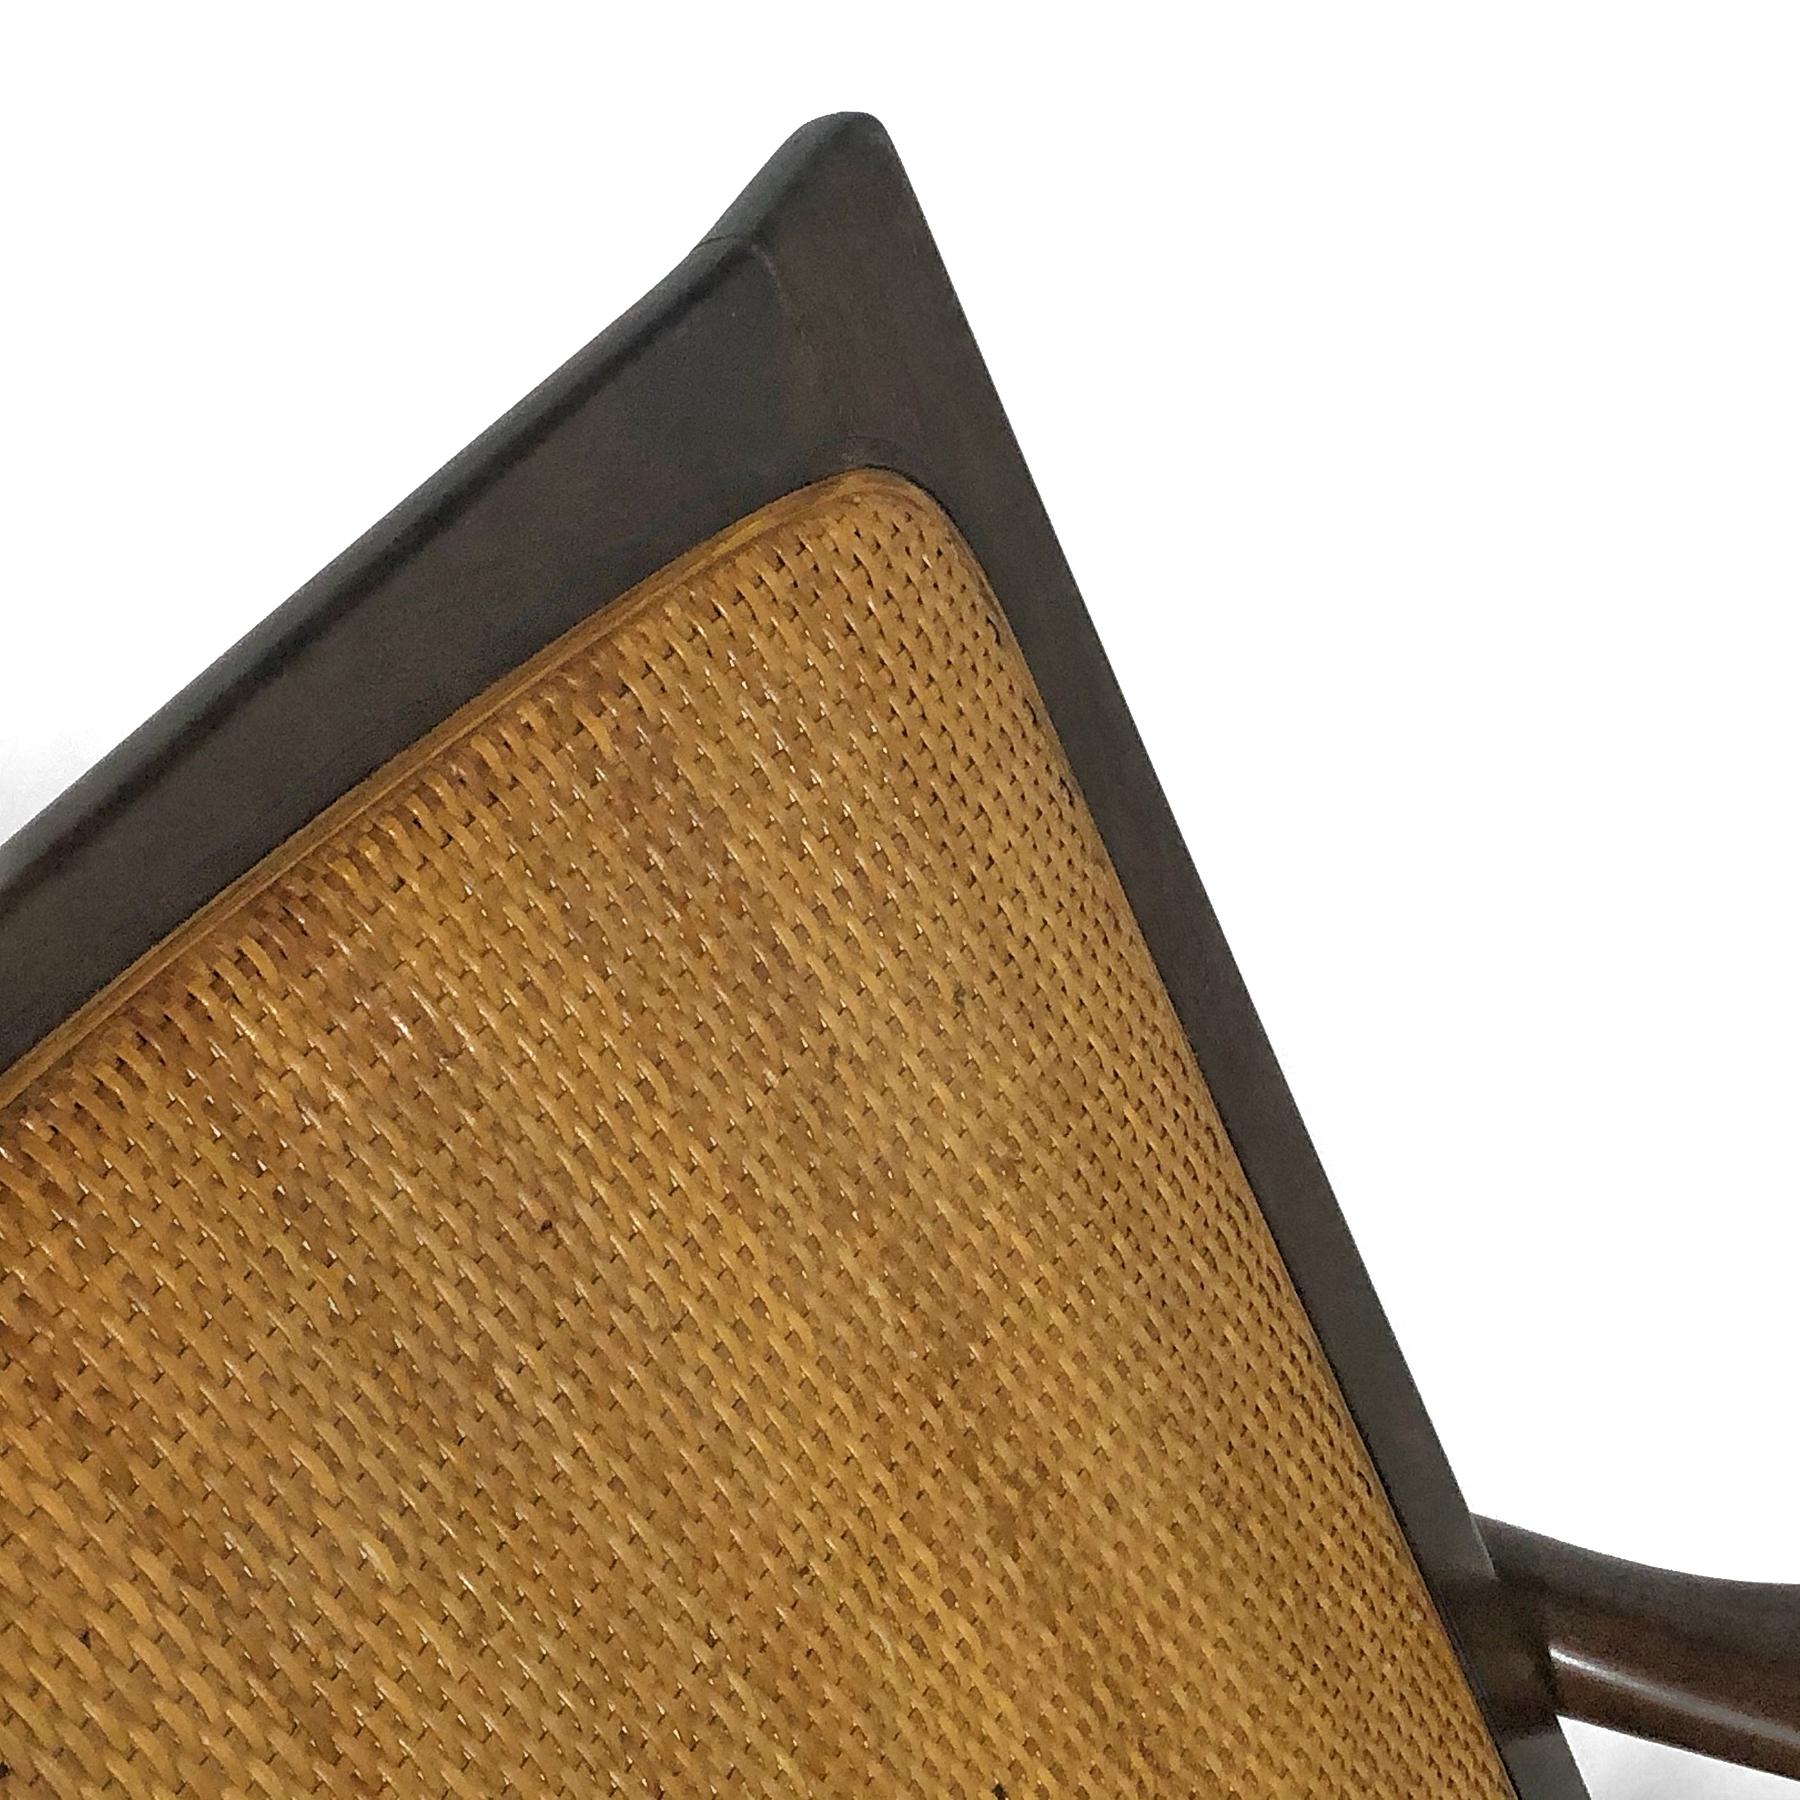 Ib Kofod-Larsen Cane-Back Lounge Chair Pair For Sale 1